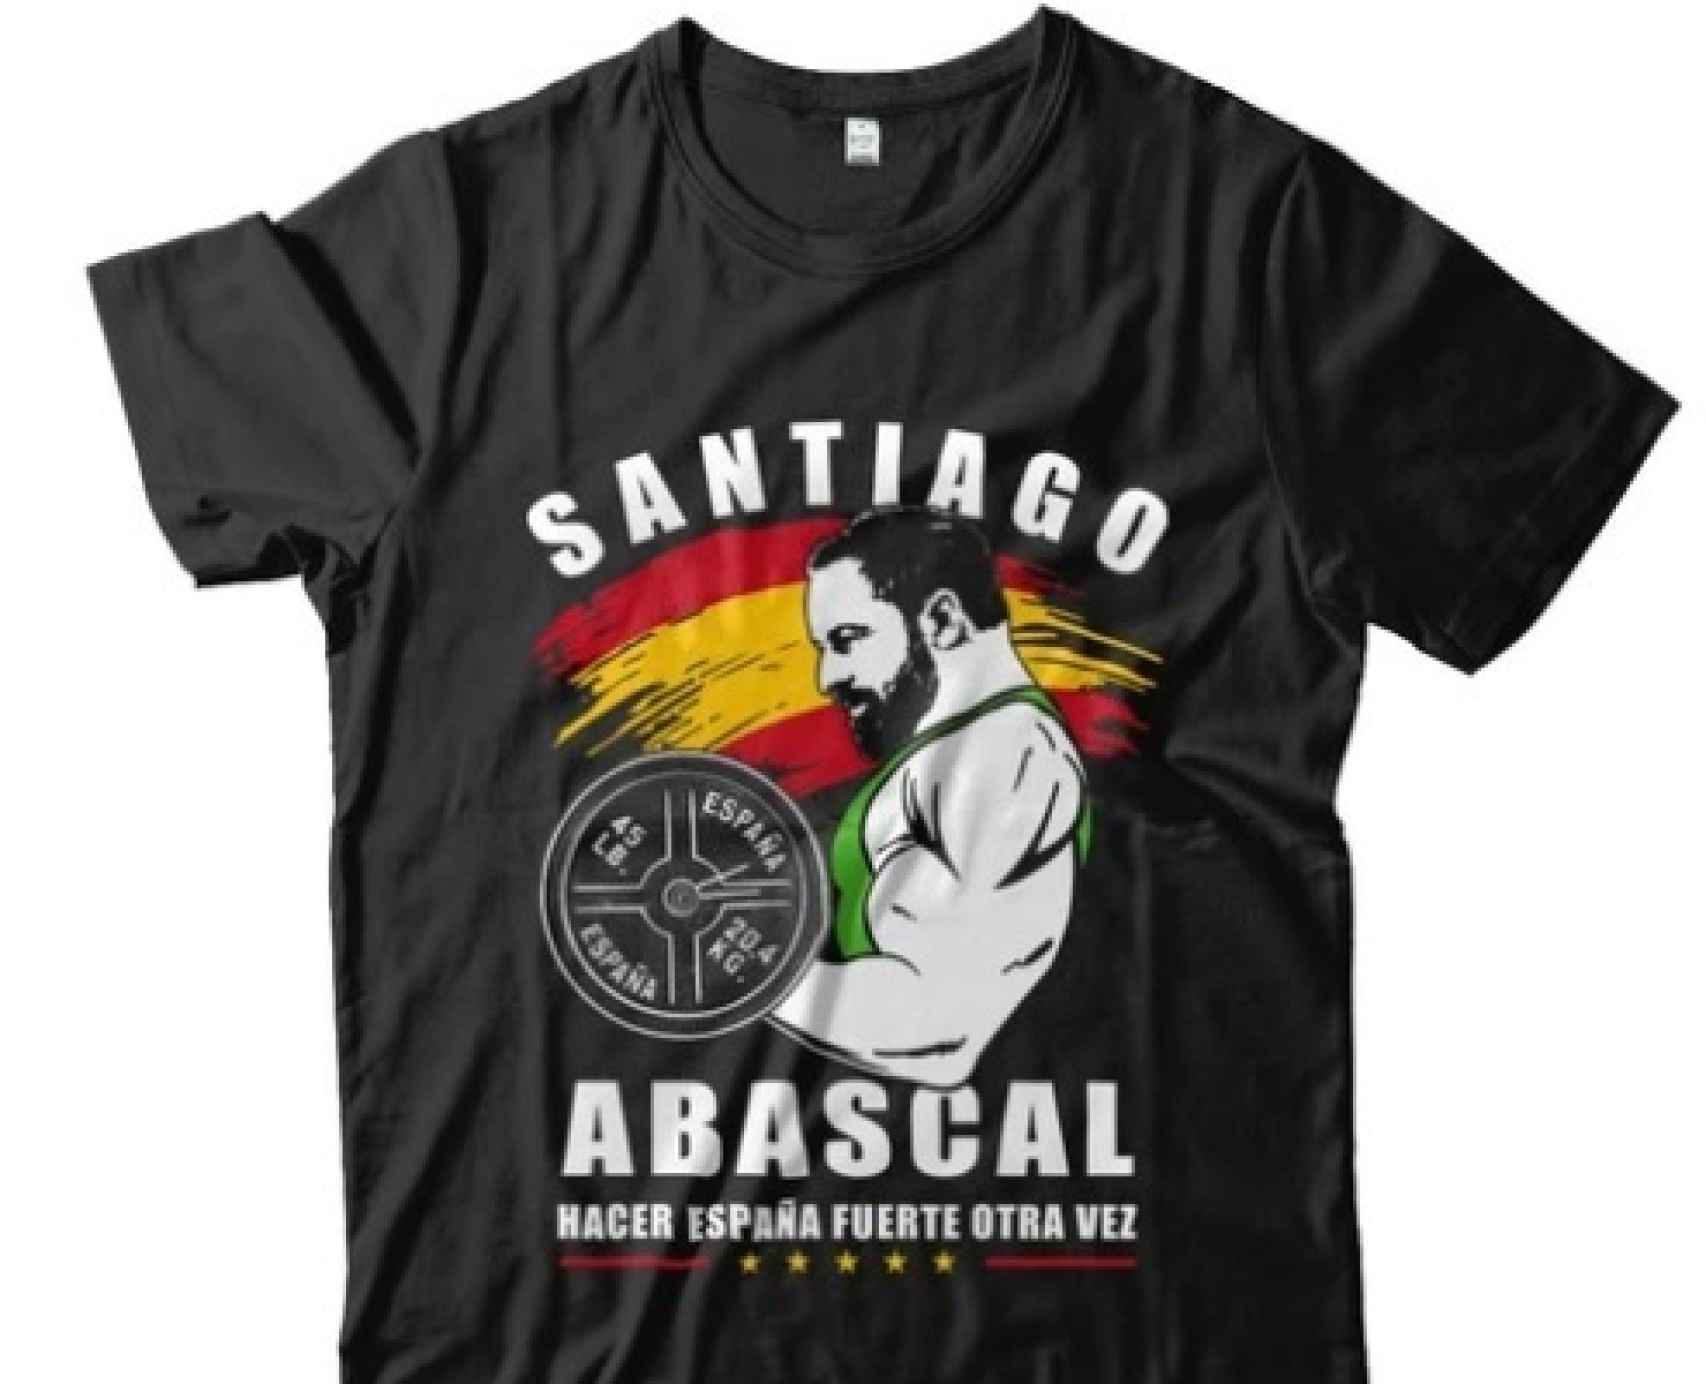 Camiseta de Santiago Abascal.